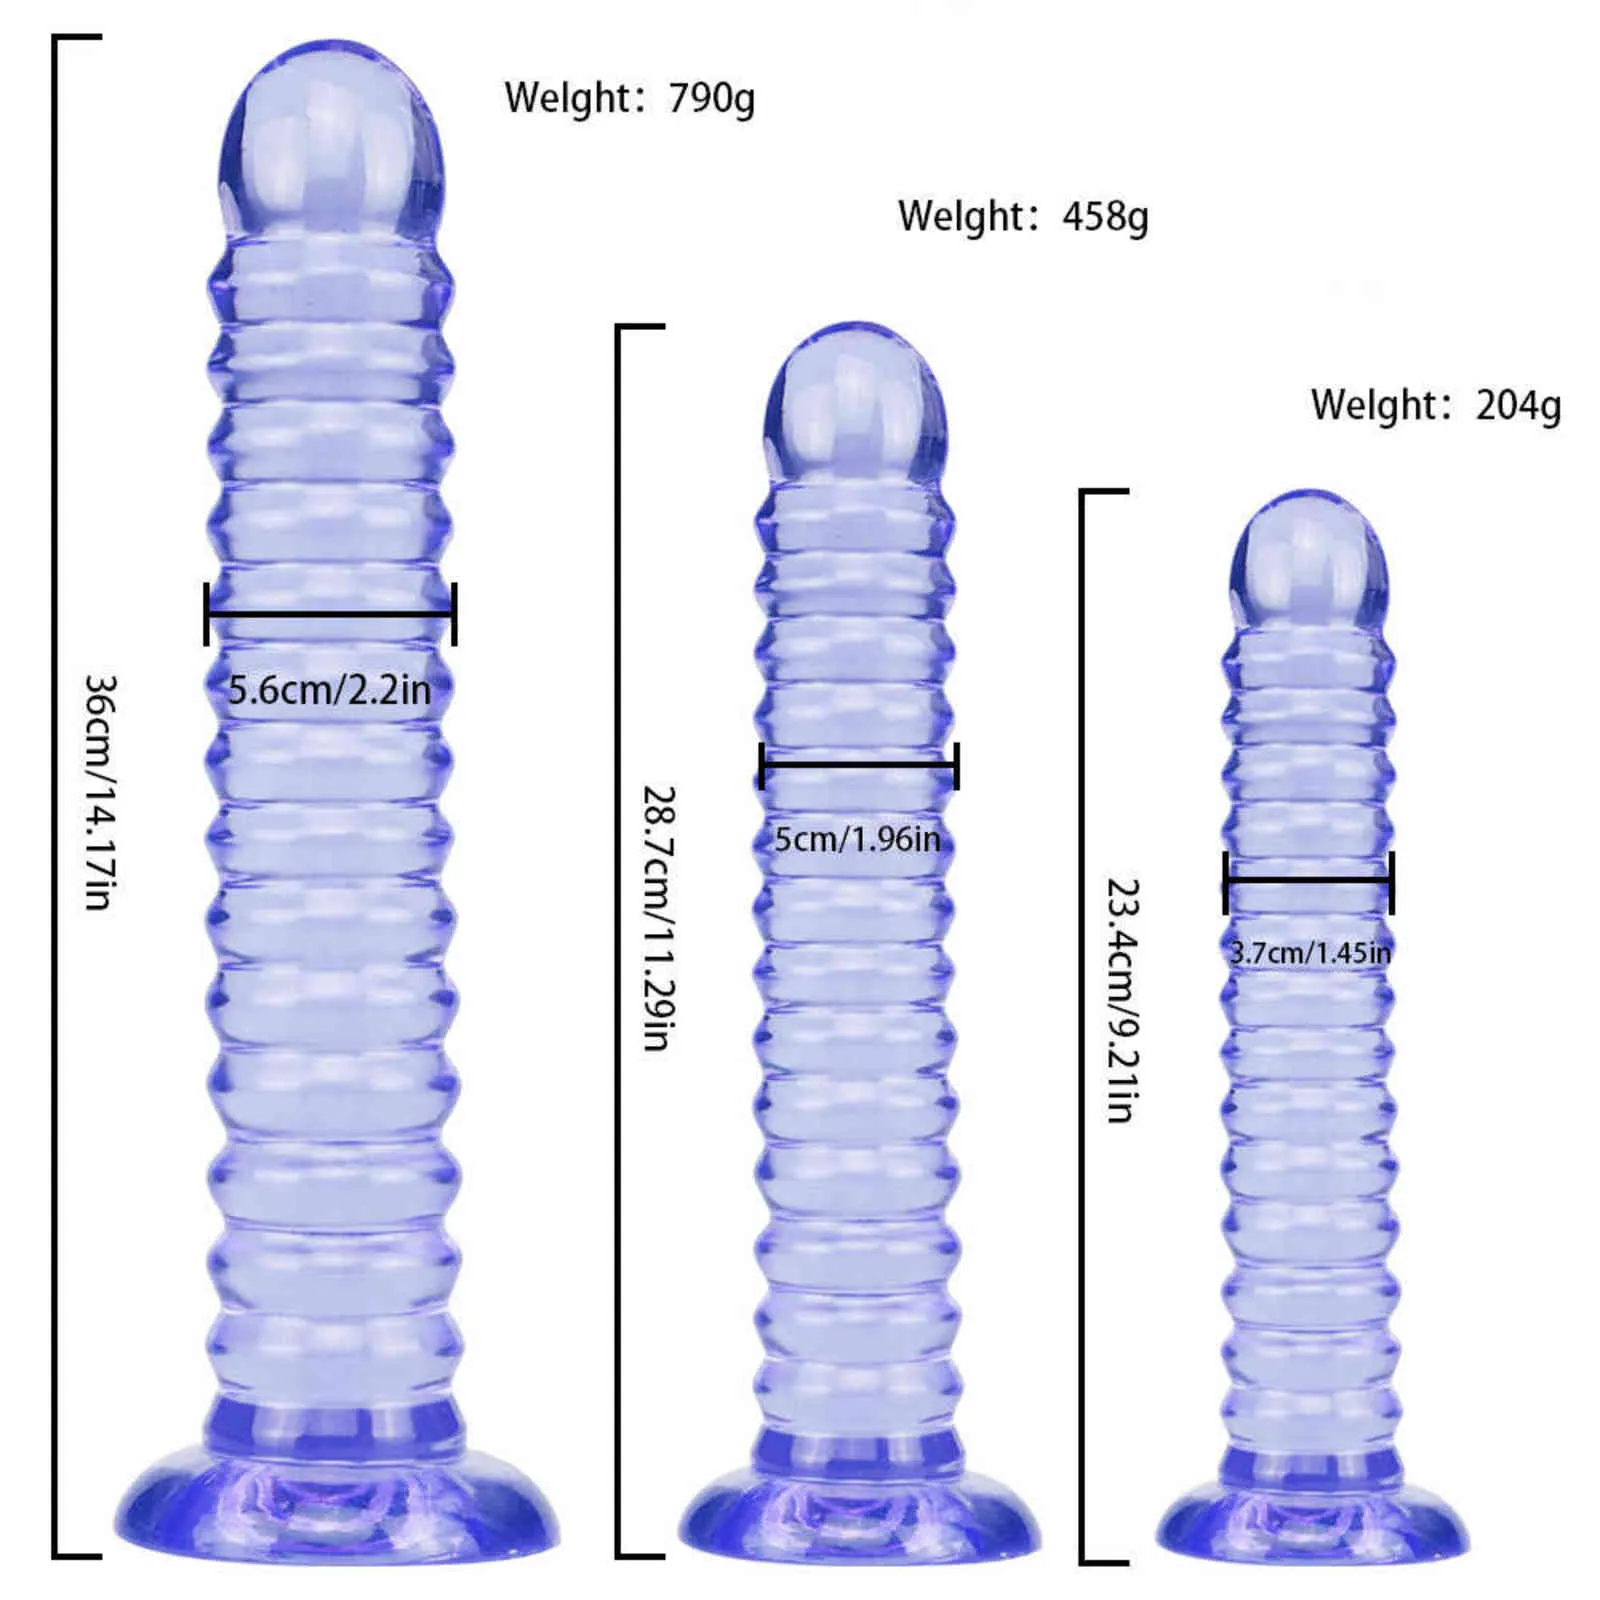 NXY Cockrings Anal sex toys 5 Style Jelly Dildo Avec Ventouse Énormes Godes pour Femme Hommes Fake Dick Butt Plug Erotic Shop 1123 1124